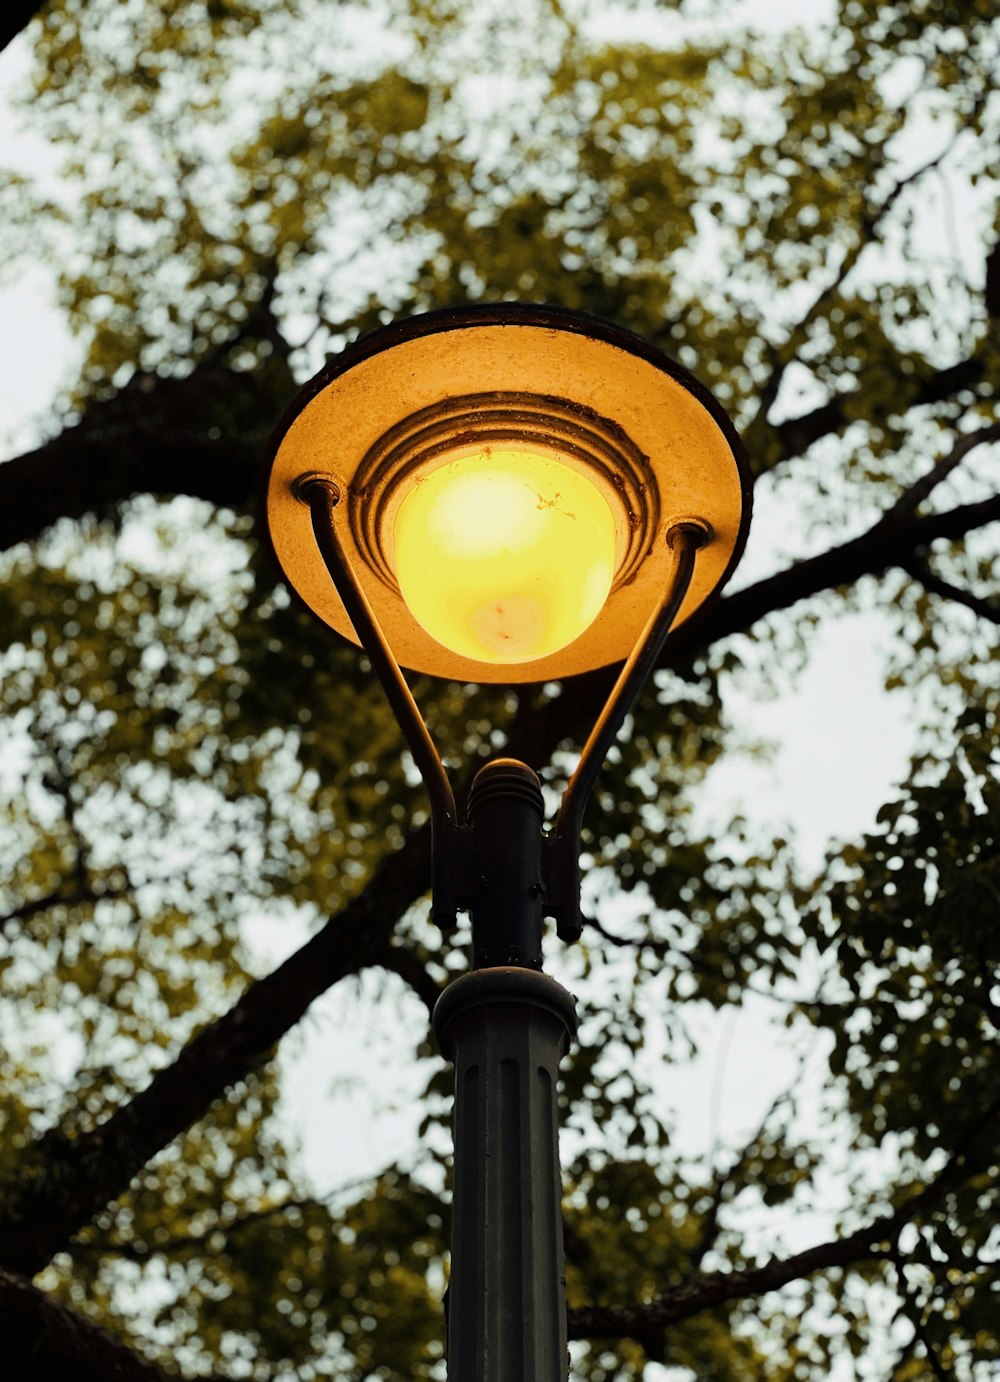 a yellow light on a pole